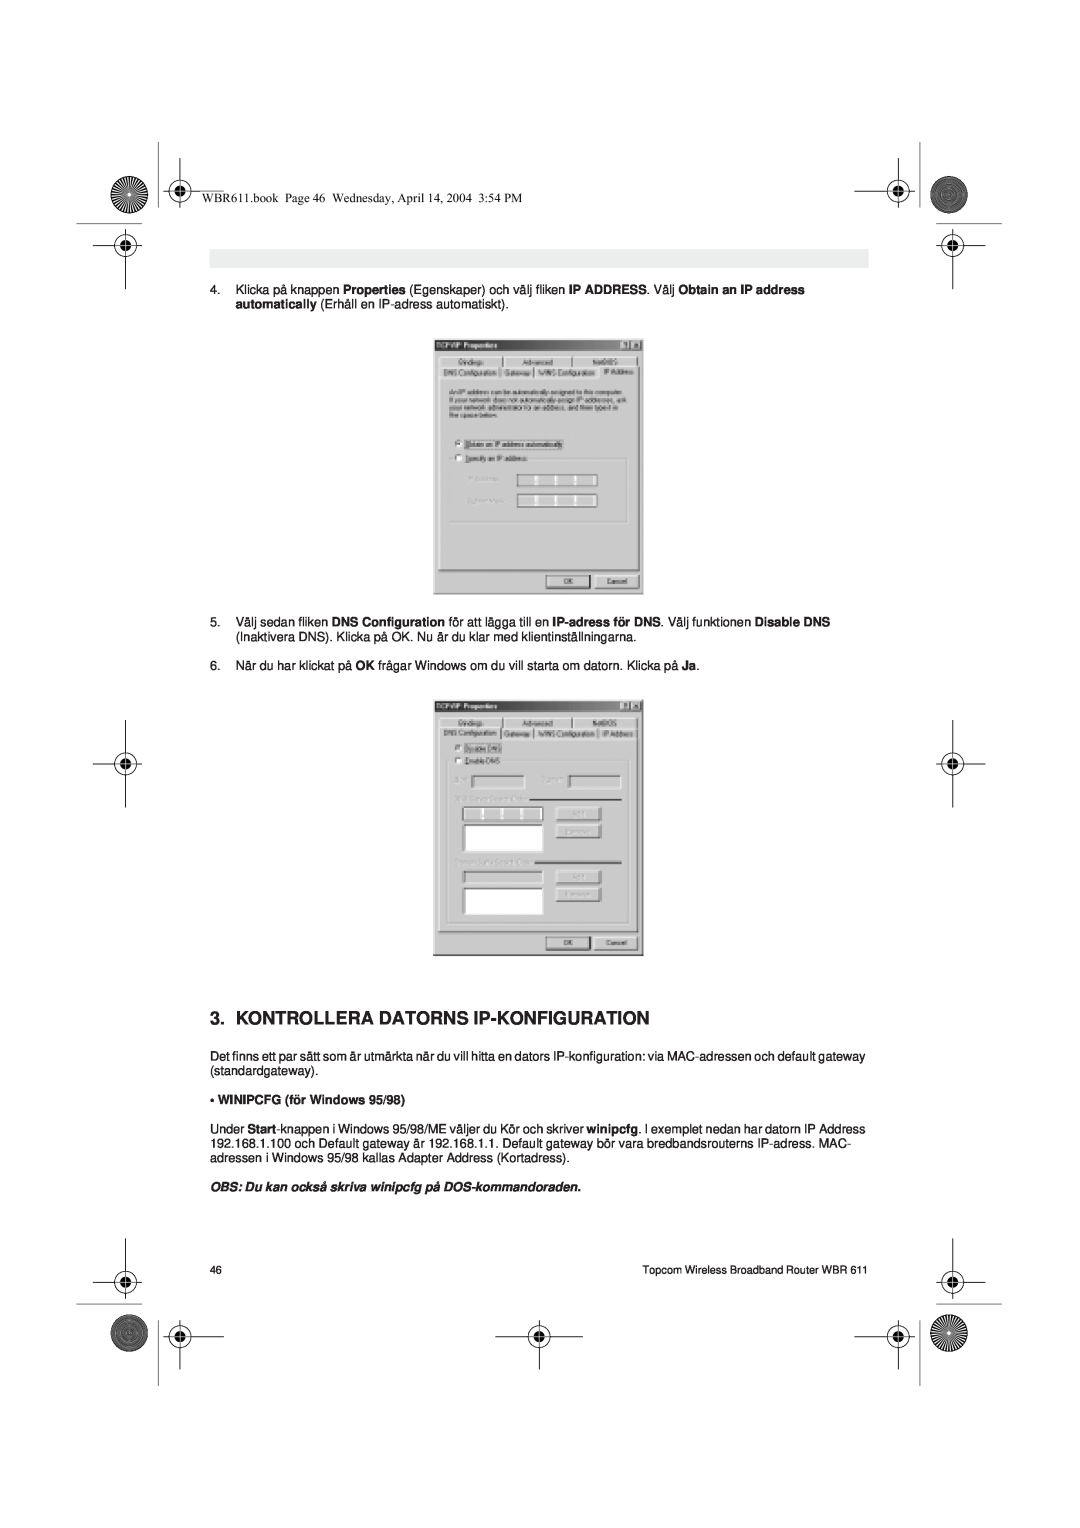 Topcom WBR 611 manual do utilizador Kontrollera Datorns Ip-Konfiguration, WINIPCFG för Windows 95/98 